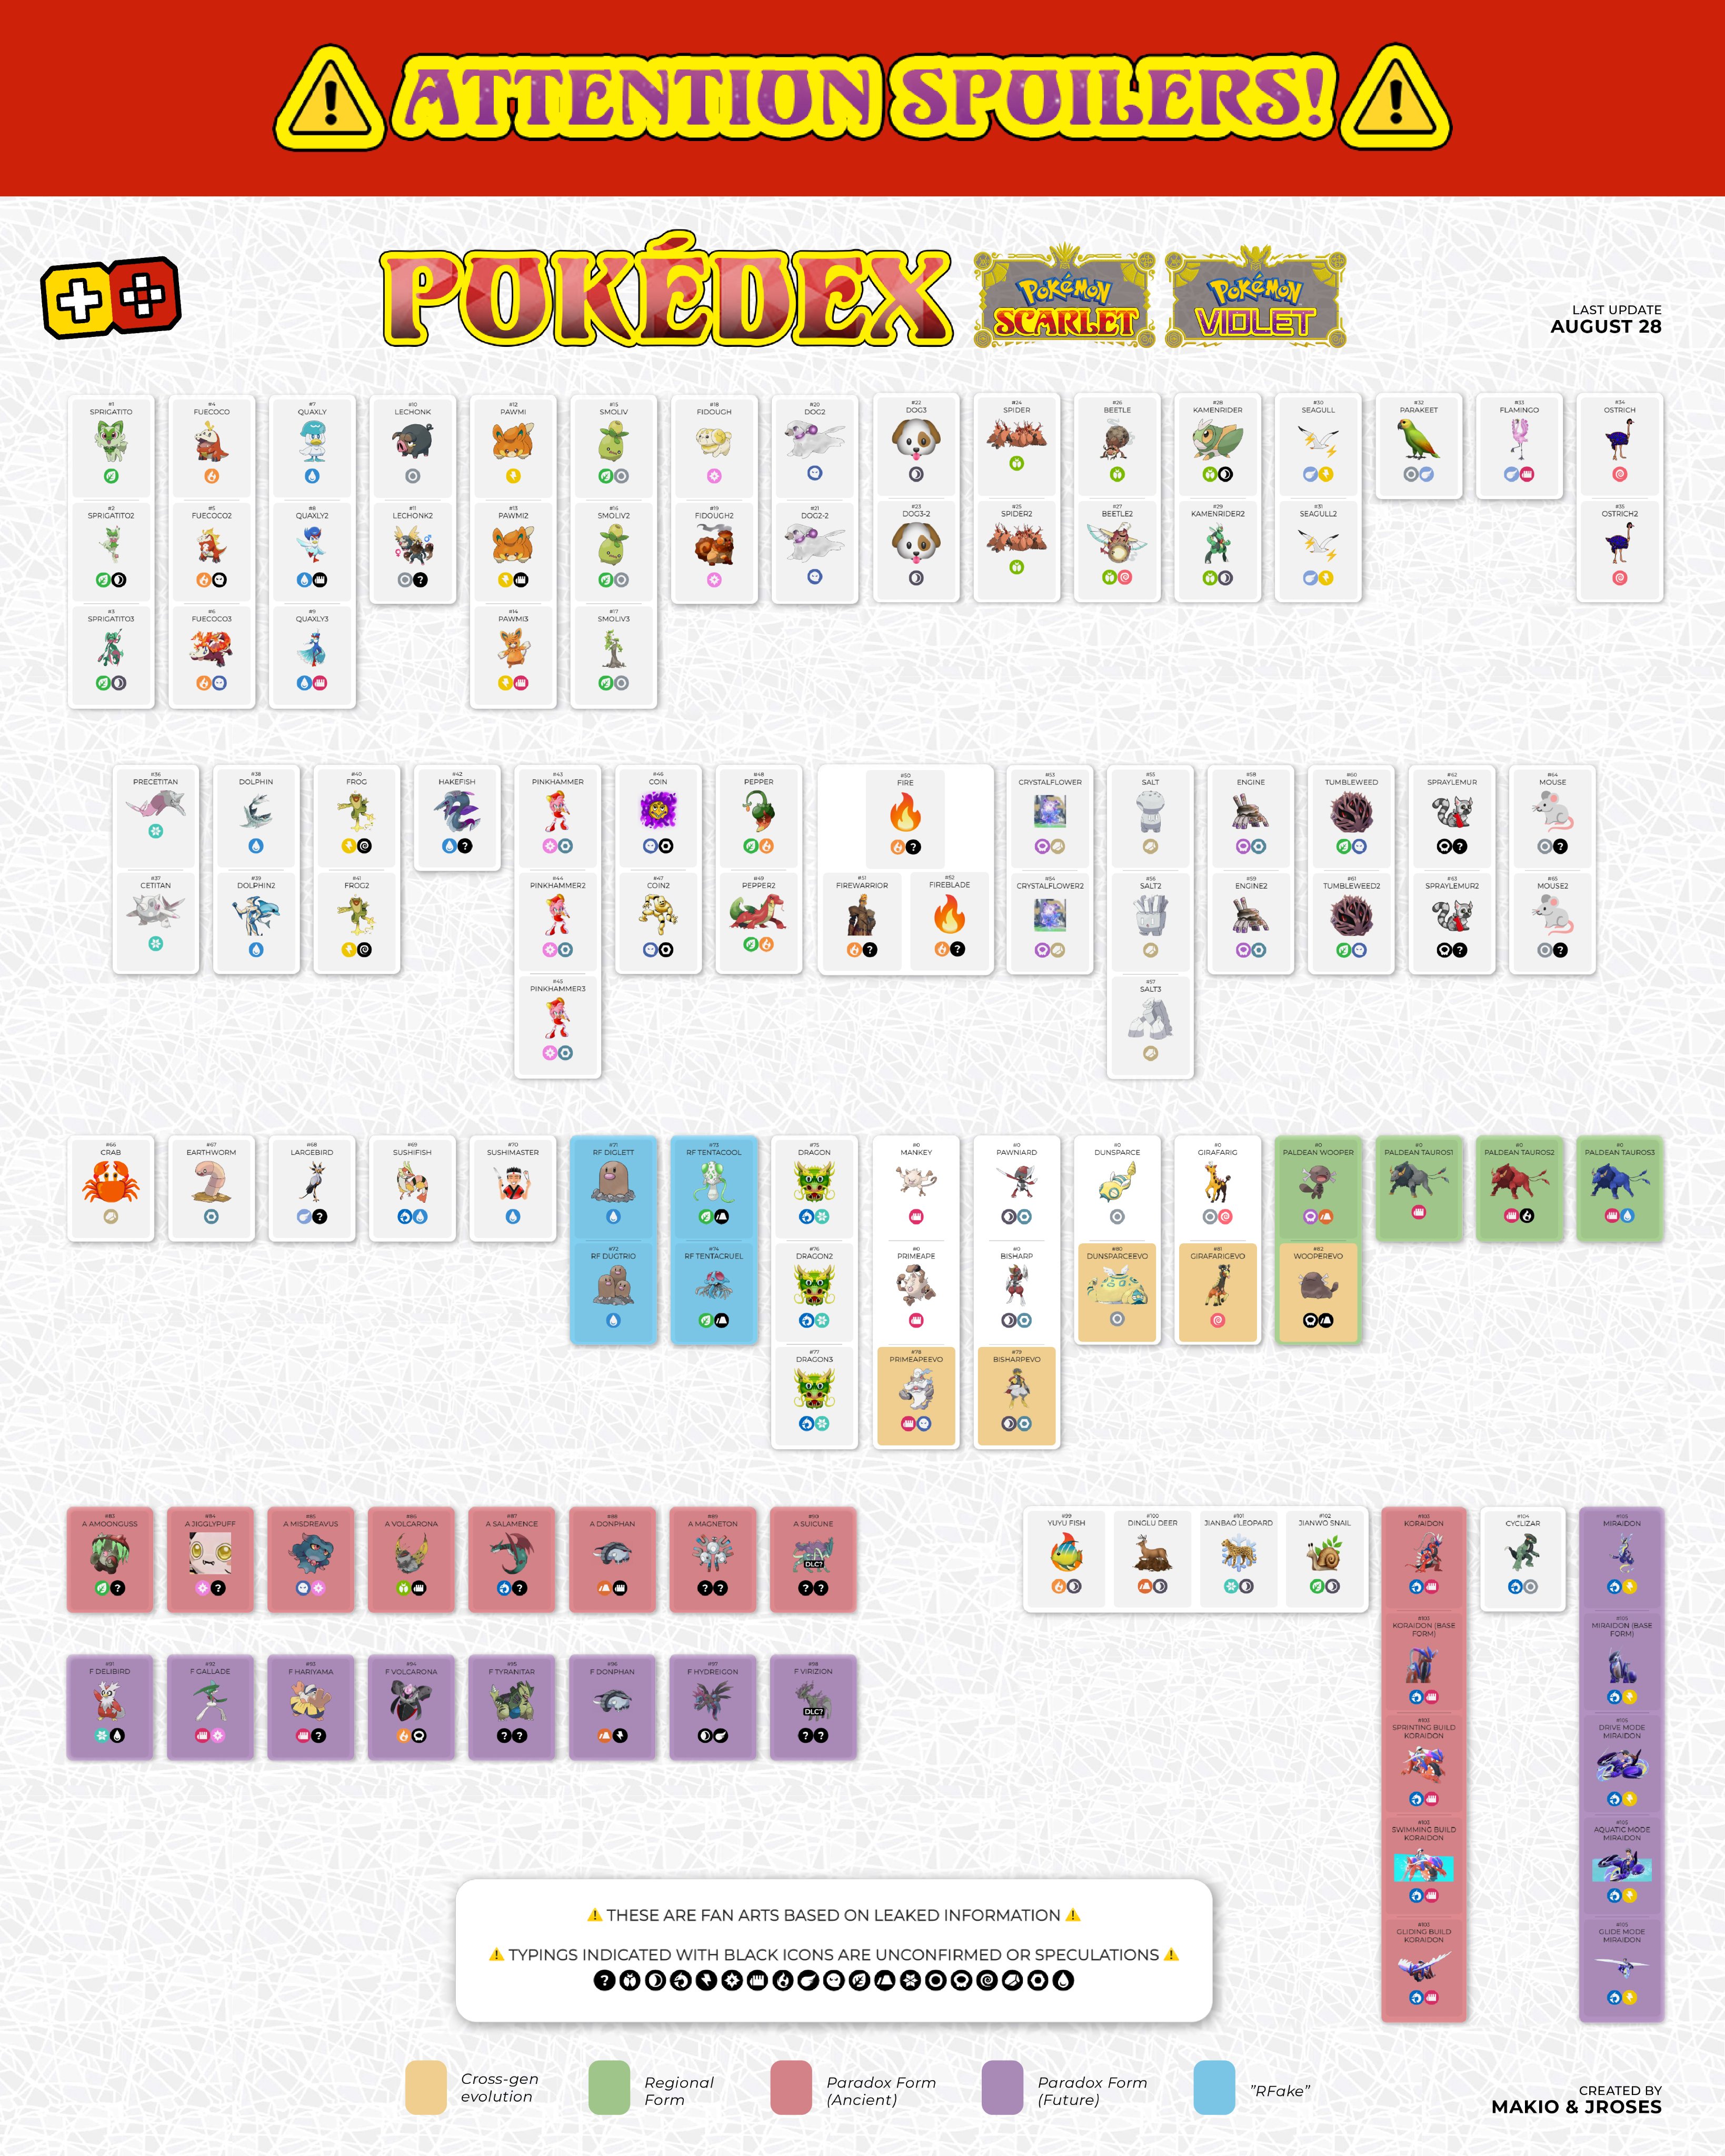 Pokemon Scarlet and Violet - Paldea Gen 9 PokeDex! (Gen 9 Mons!)